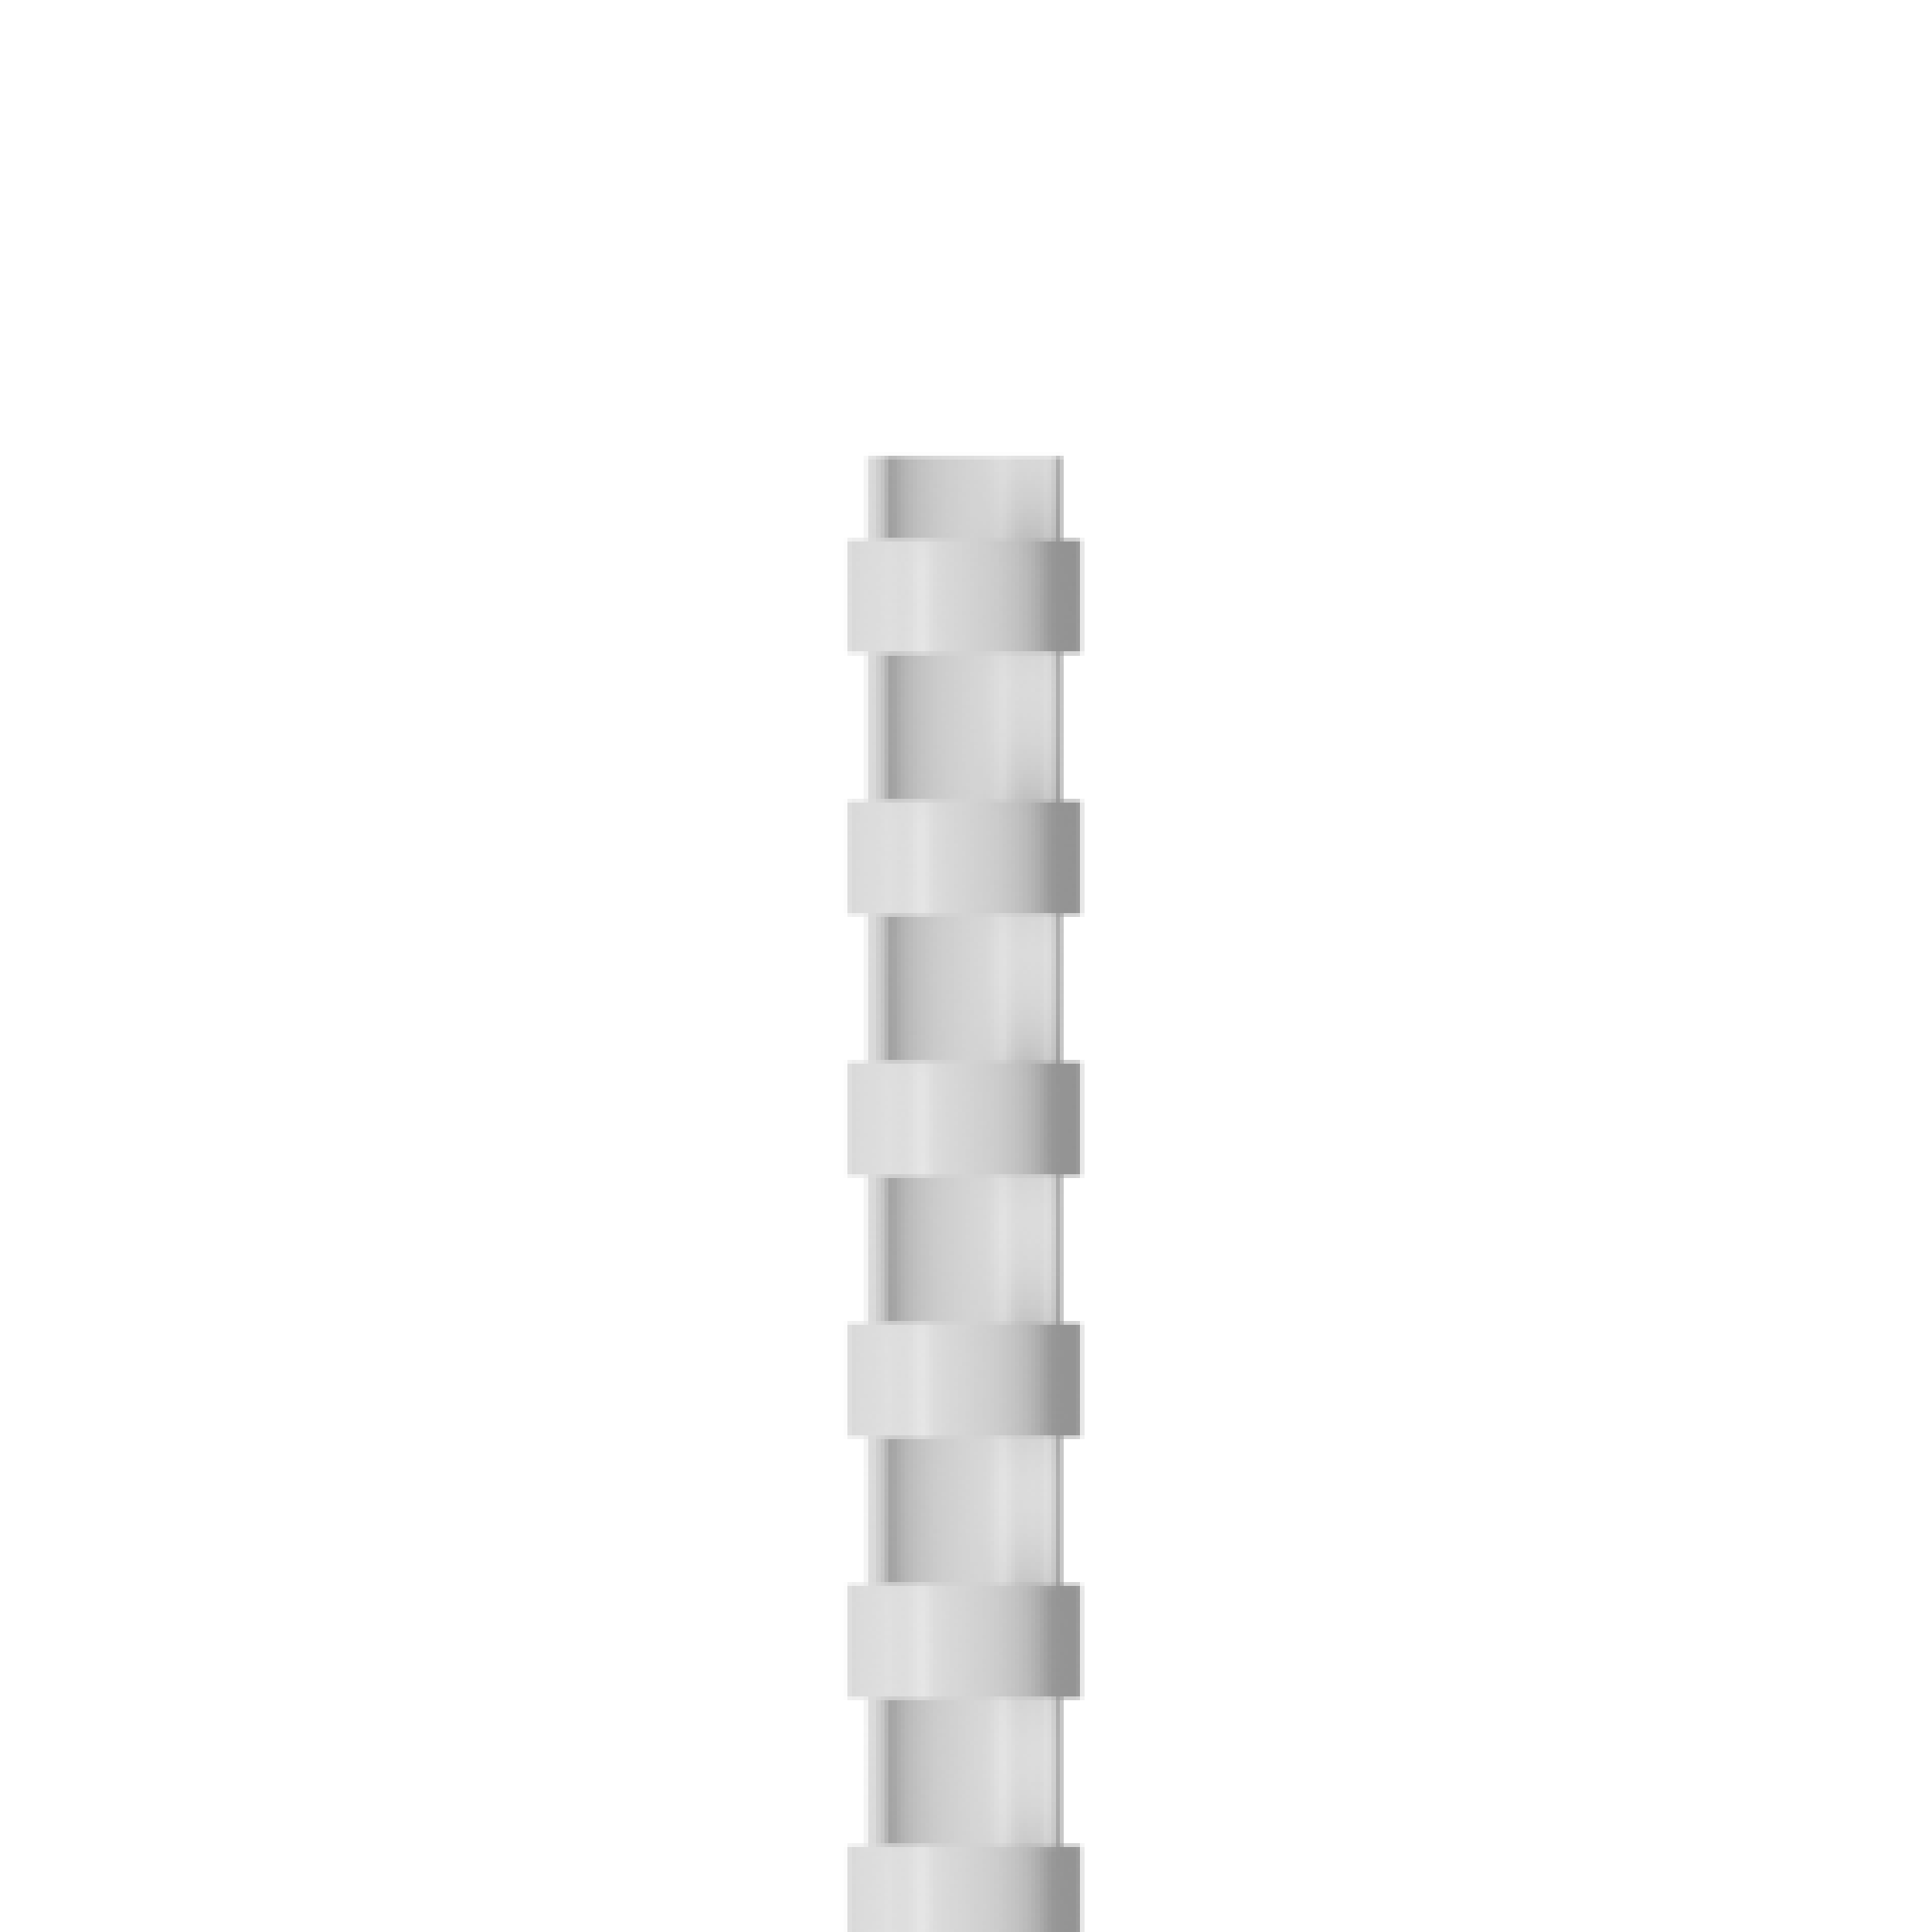 RAADO 12mm Plastic Spiral Binding Comb, White